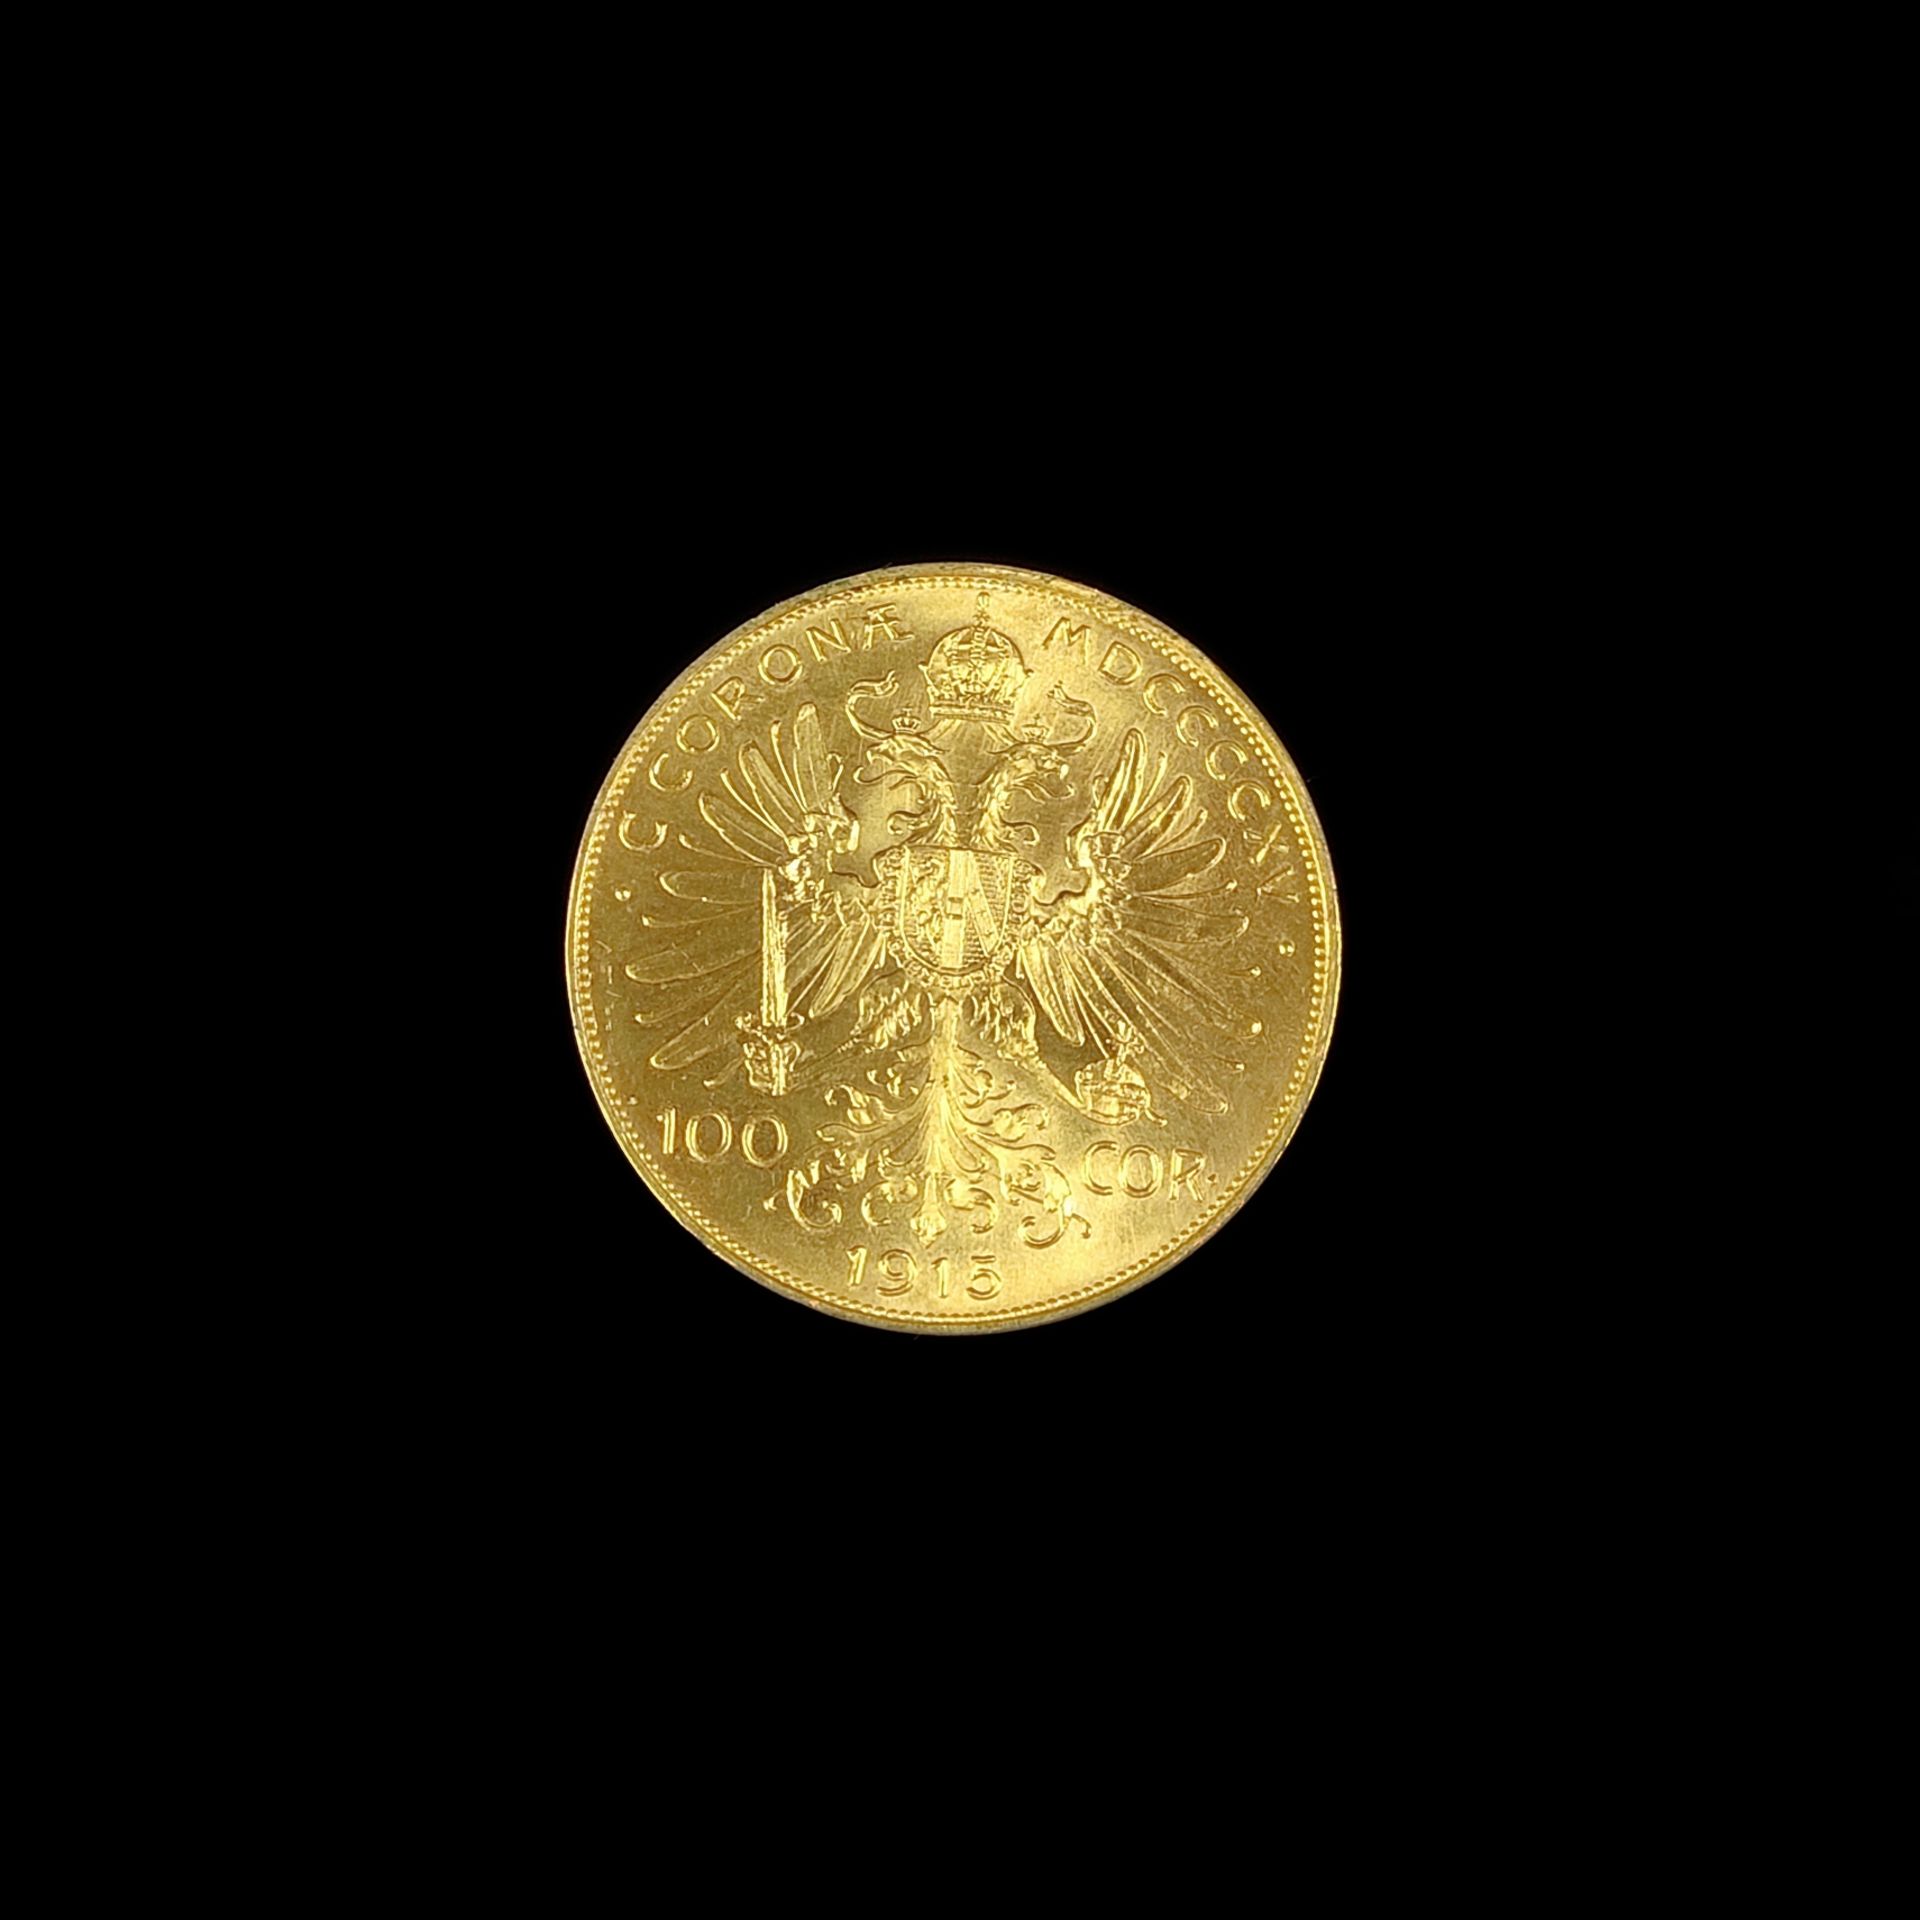 Gold coin, 100 Kronen / crowns, Franz Joseph I, Austria, 1915, 900 yellow gold, 33.84g, diameter 36 - Image 2 of 2